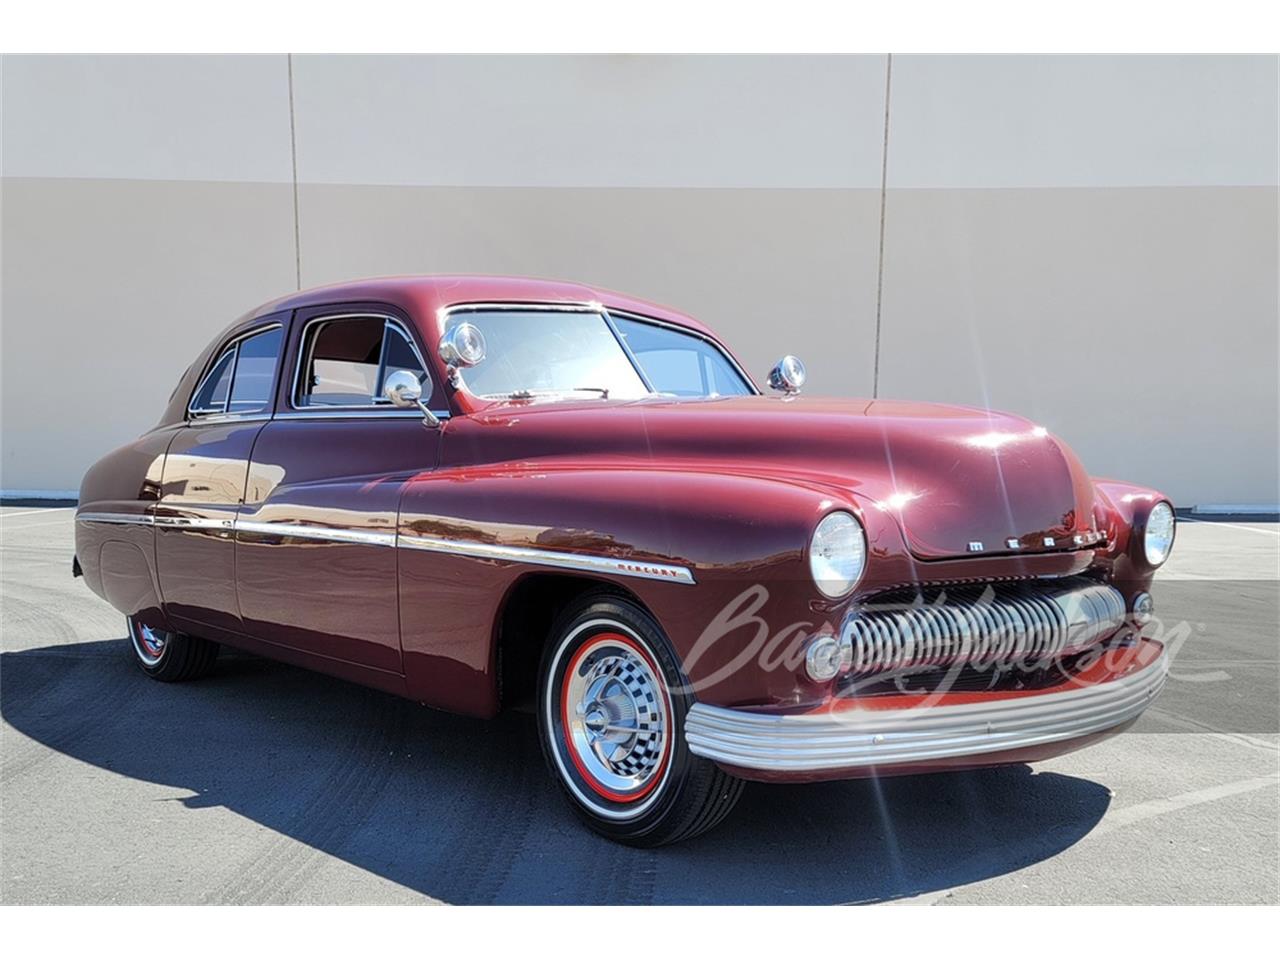 For Sale at Auction: 1949 Mercury Custom in Las Vegas, Nevada for sale in Las Vegas, NV